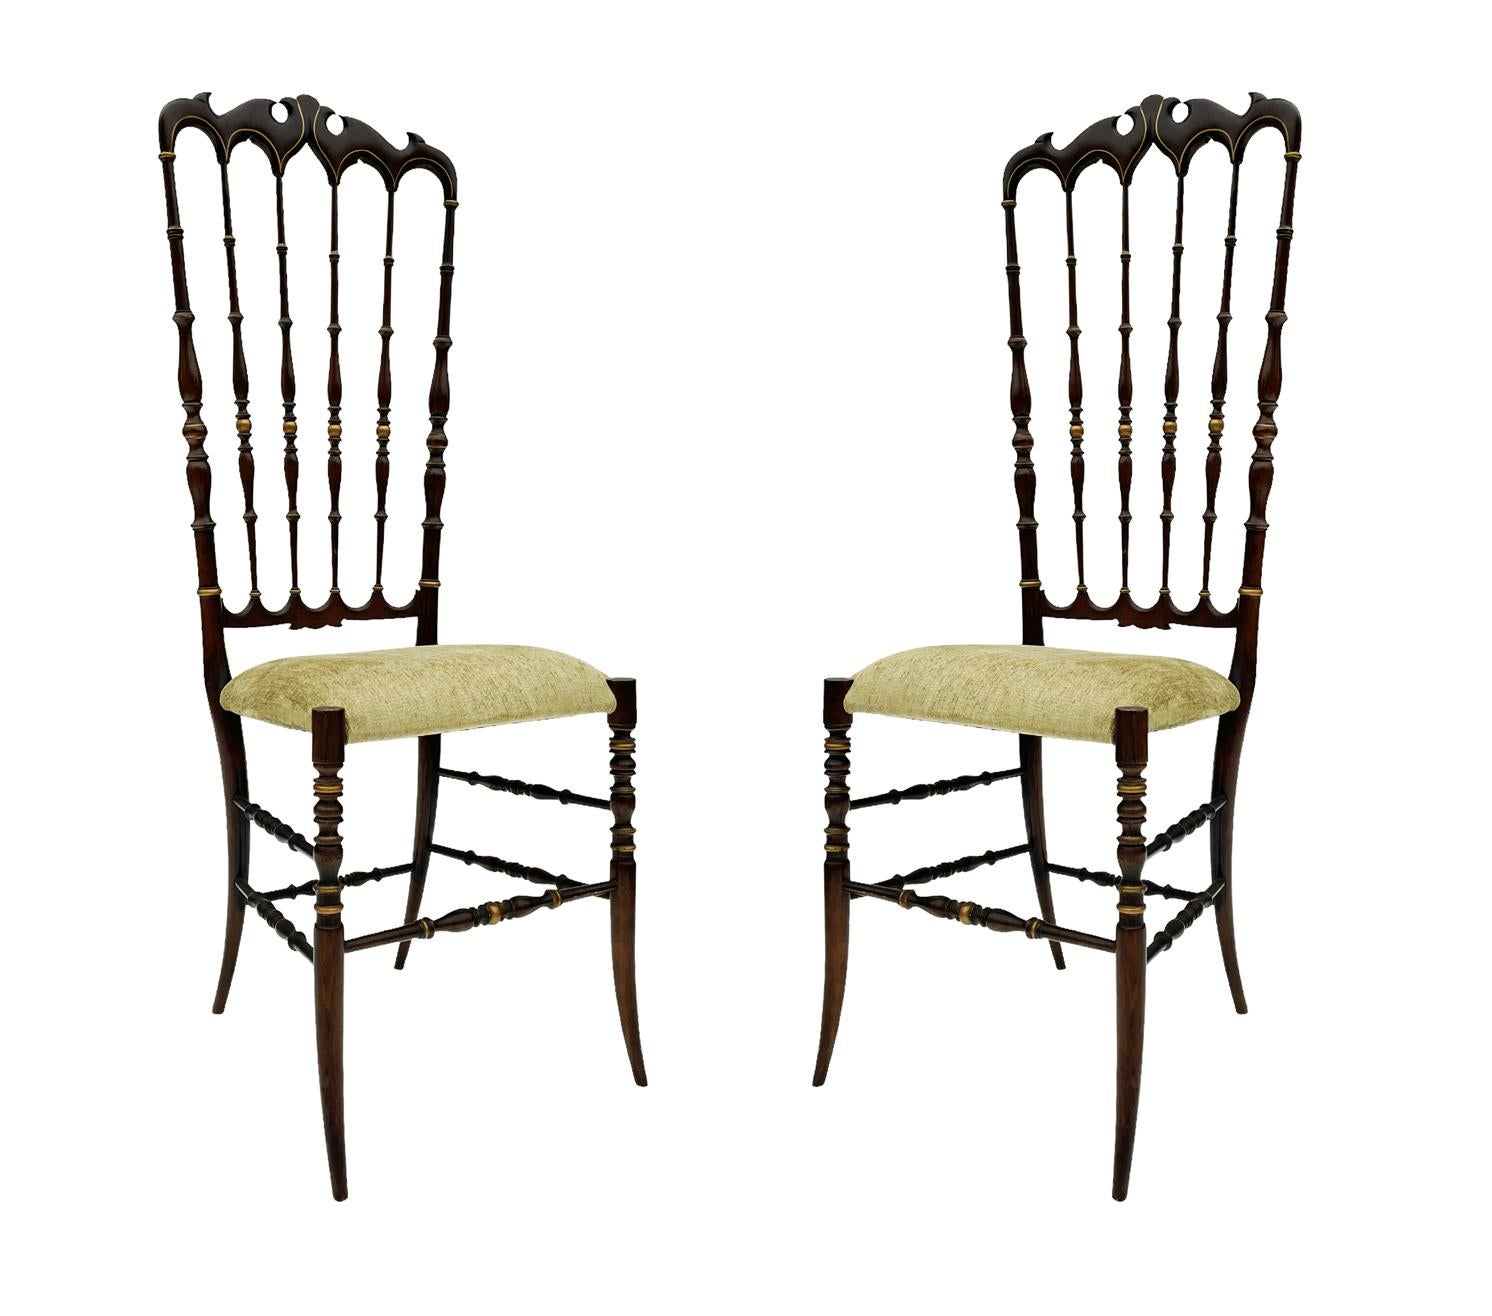 Pair of Hollywood Regency Italian Walnut Chiavari Chairs with Tall Ladder Backs  For Sale 5